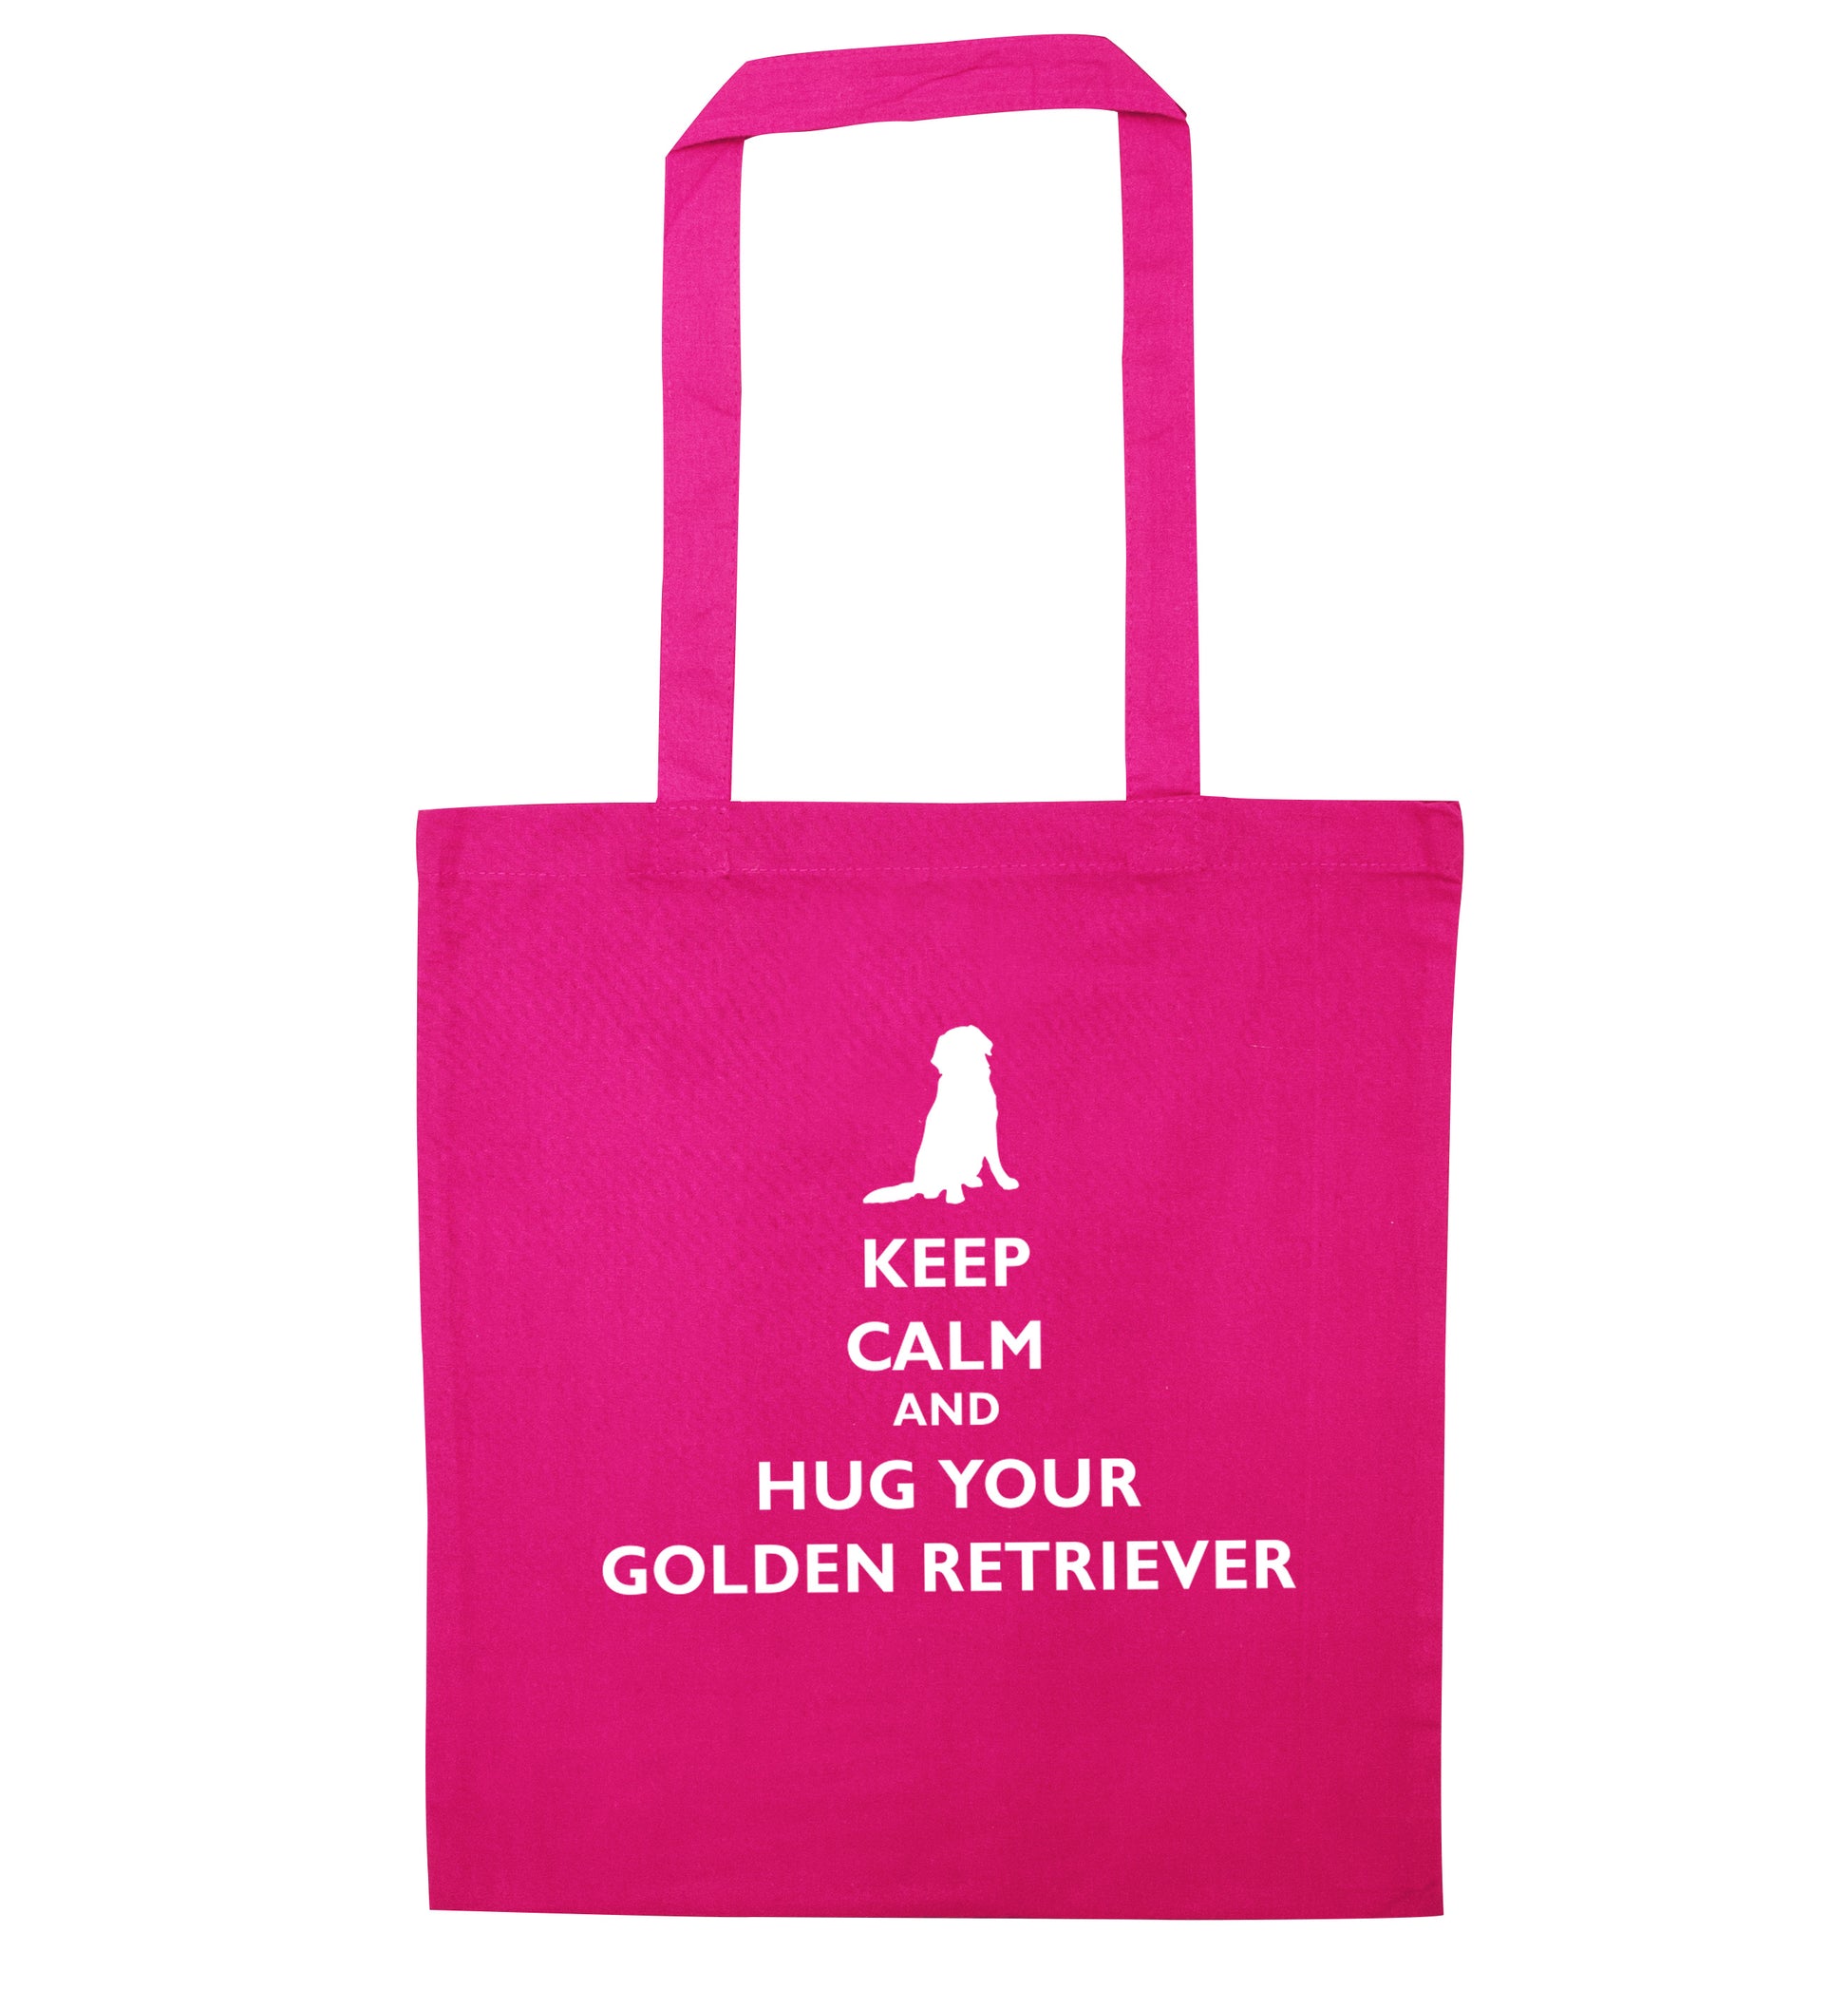 Keep calm and hug your golden retriever pink tote bag